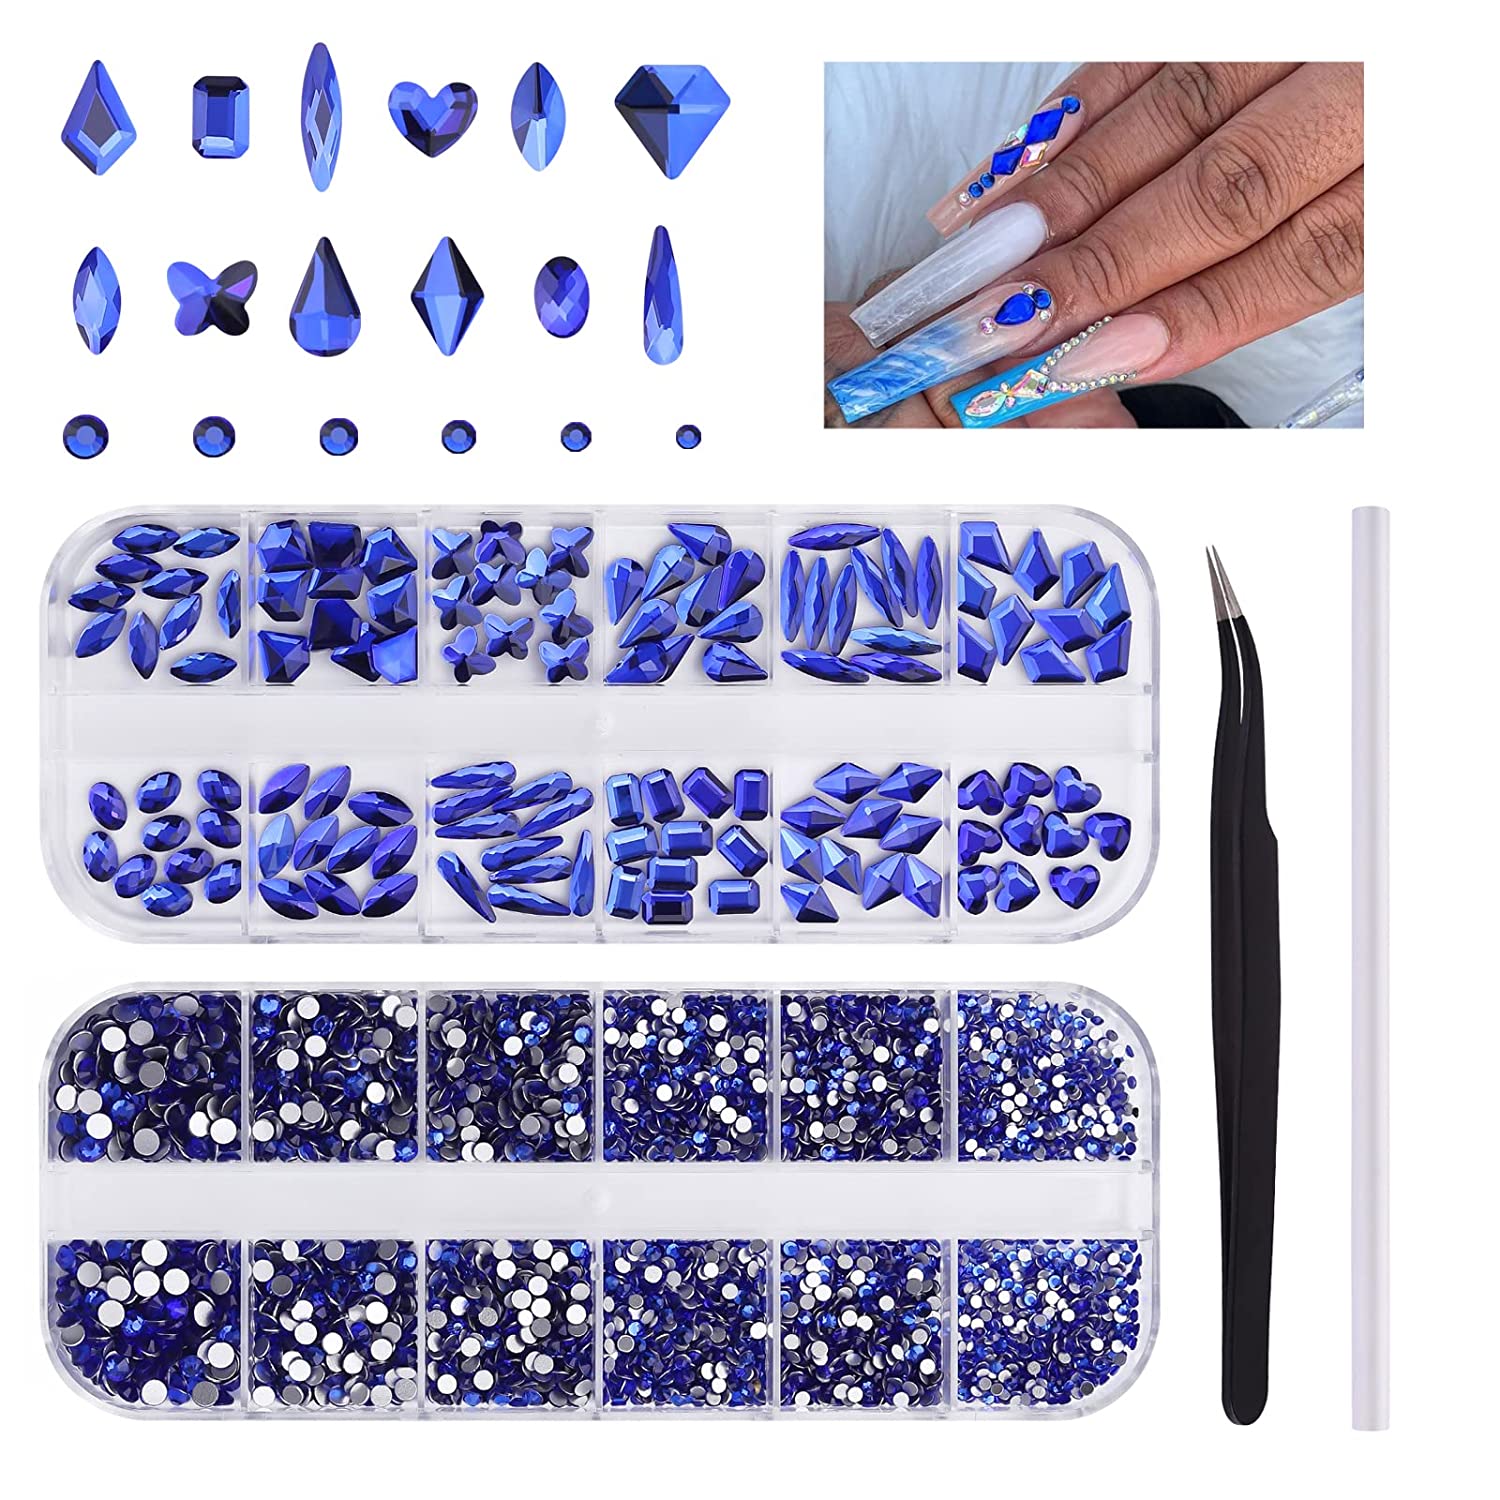 3120 Pcs Green Nail Art Rhinestone Gems Kit EBANKU Nail Art Crystal Flat Back Nail Diamond Jewels with Tweezers and Drill Pen